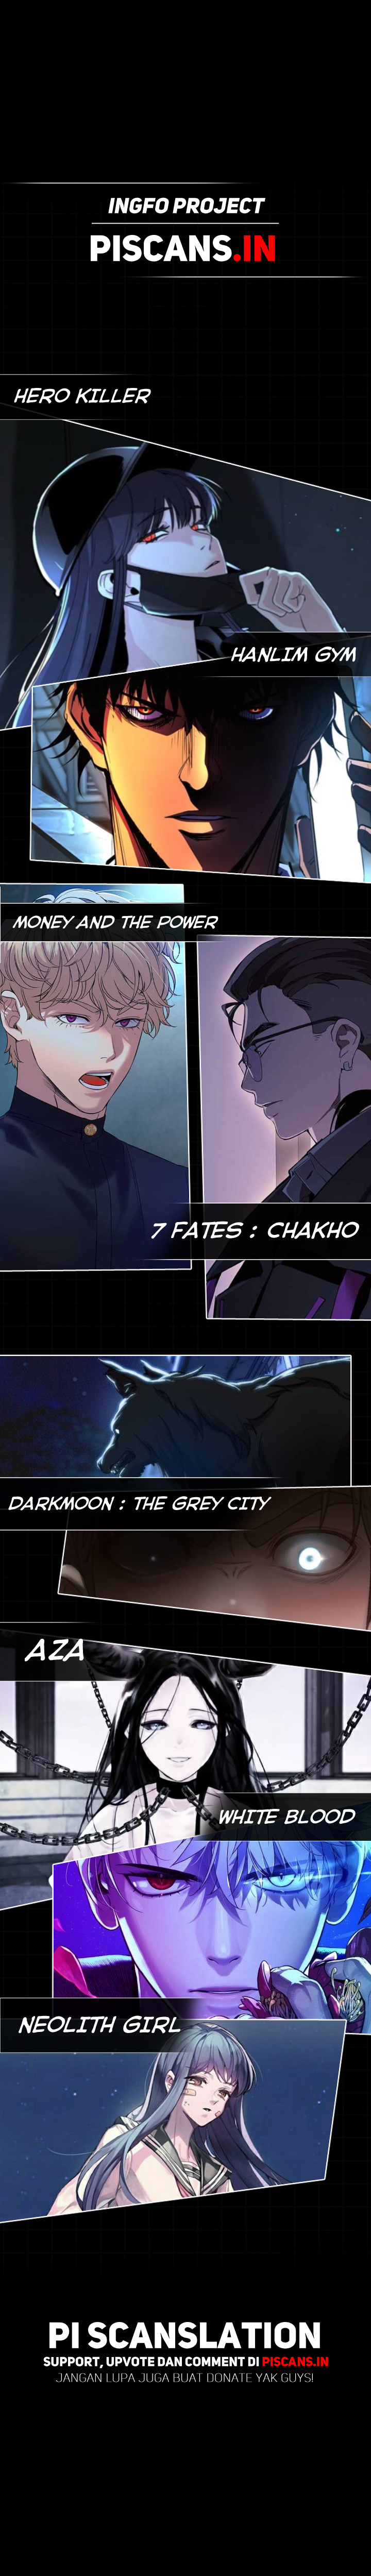 7FATES: CHAKHO Chapter 49